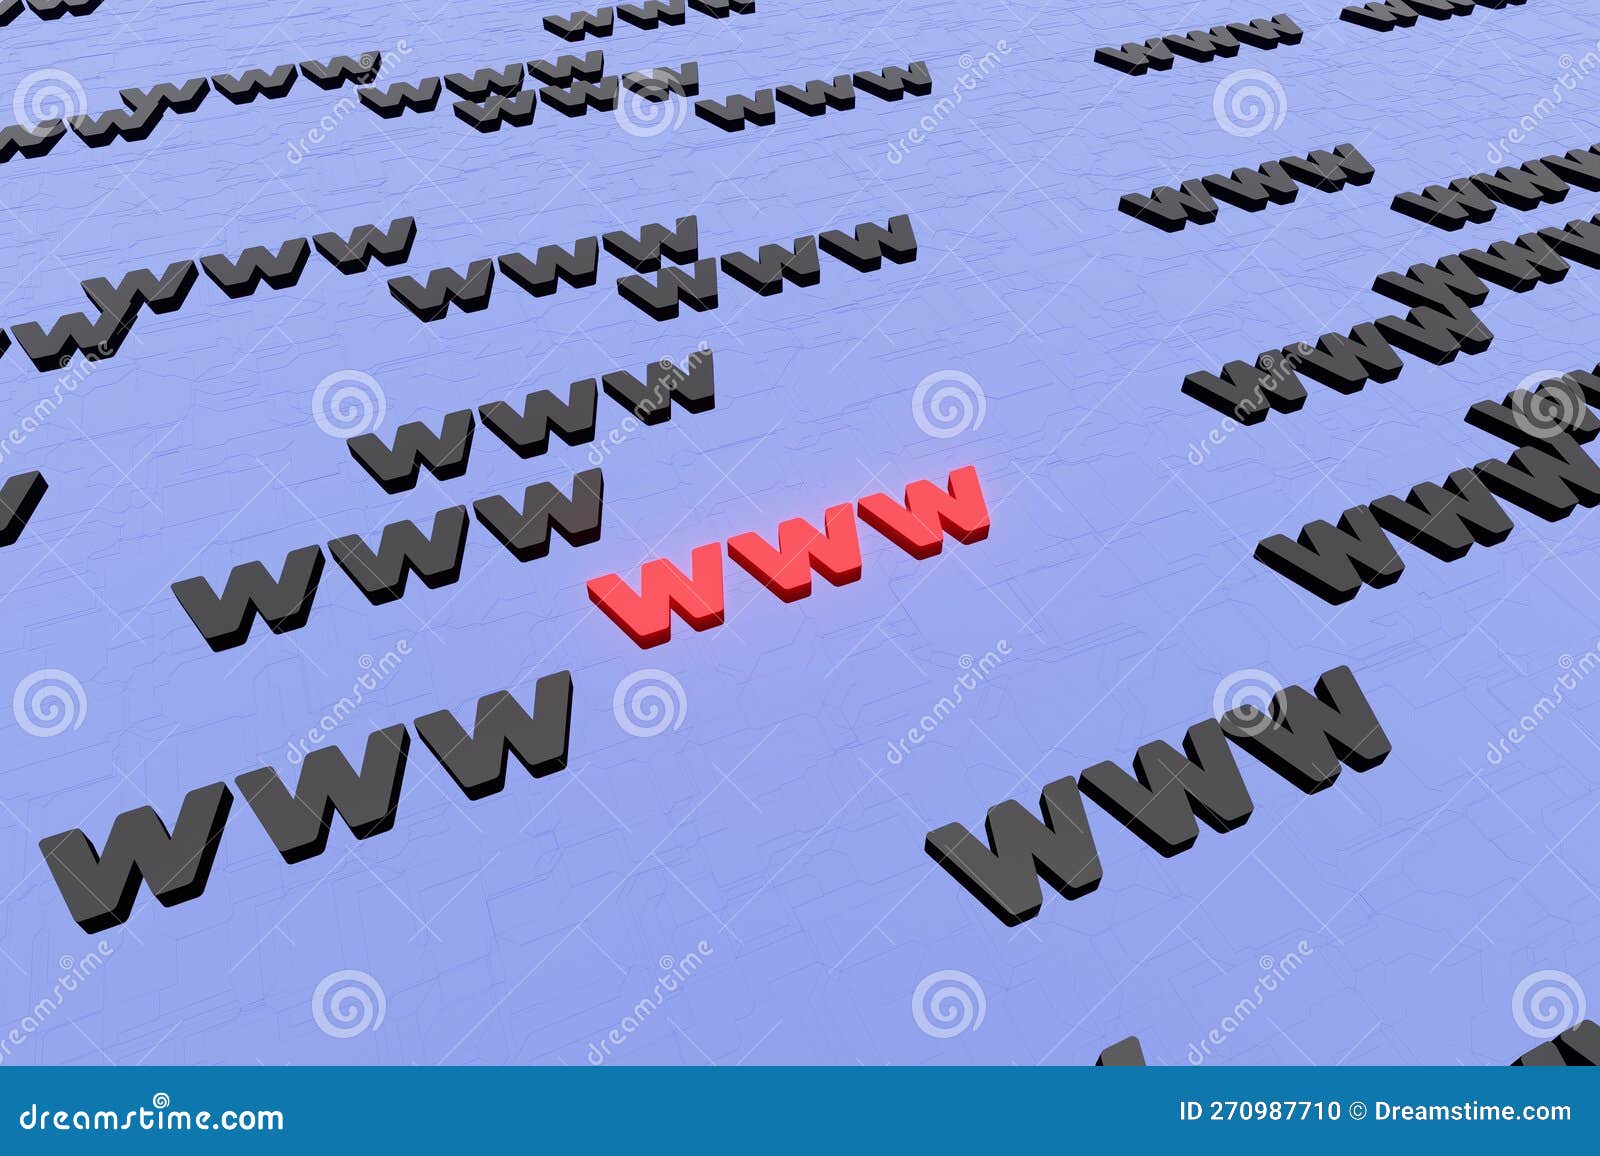 www s sign on blue background 3d render. hypertext transfer protocol secure web 3